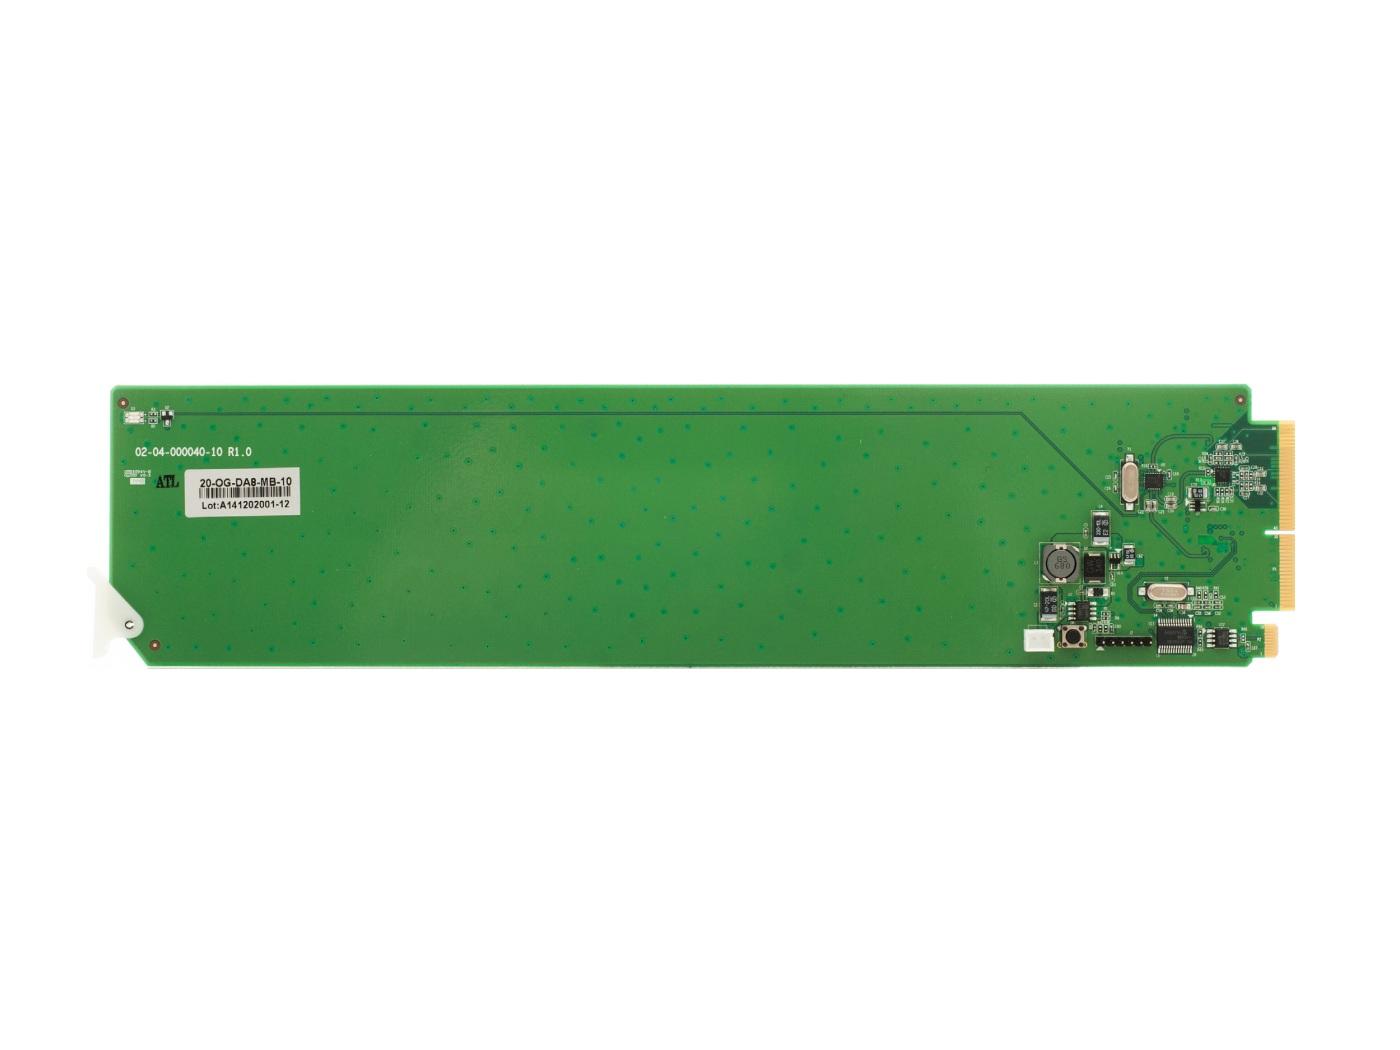 OG-DA-4HD-II-SET-2 2x 1x4 SDI Distribution Amplifier w Rear Module by Apantac